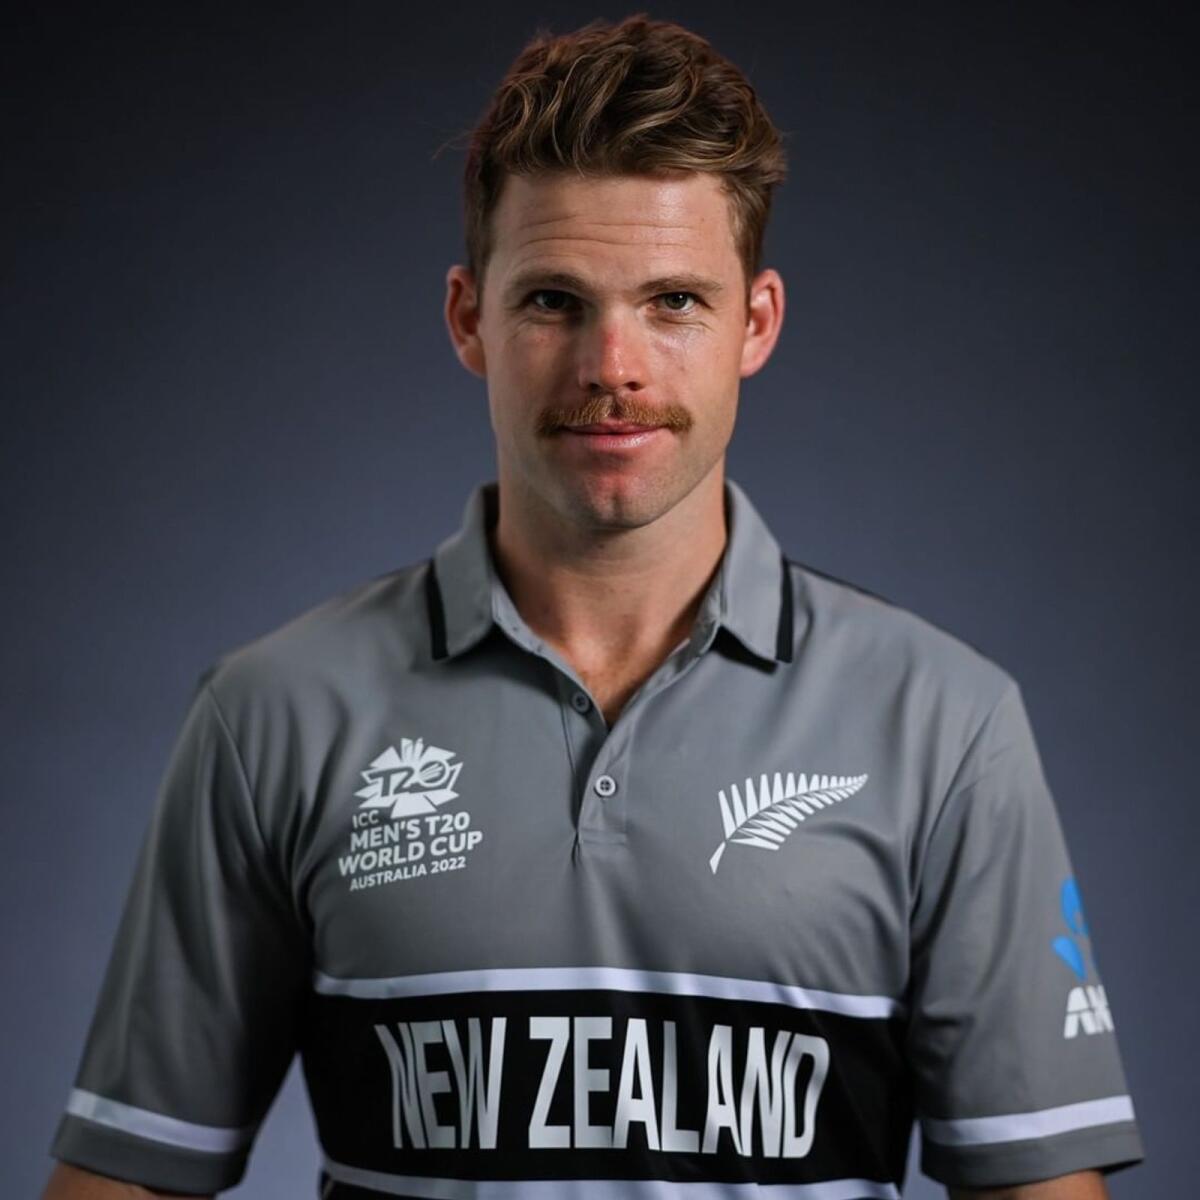 Look New Zealand team reveals new vintageinspired jersey for ICC T20